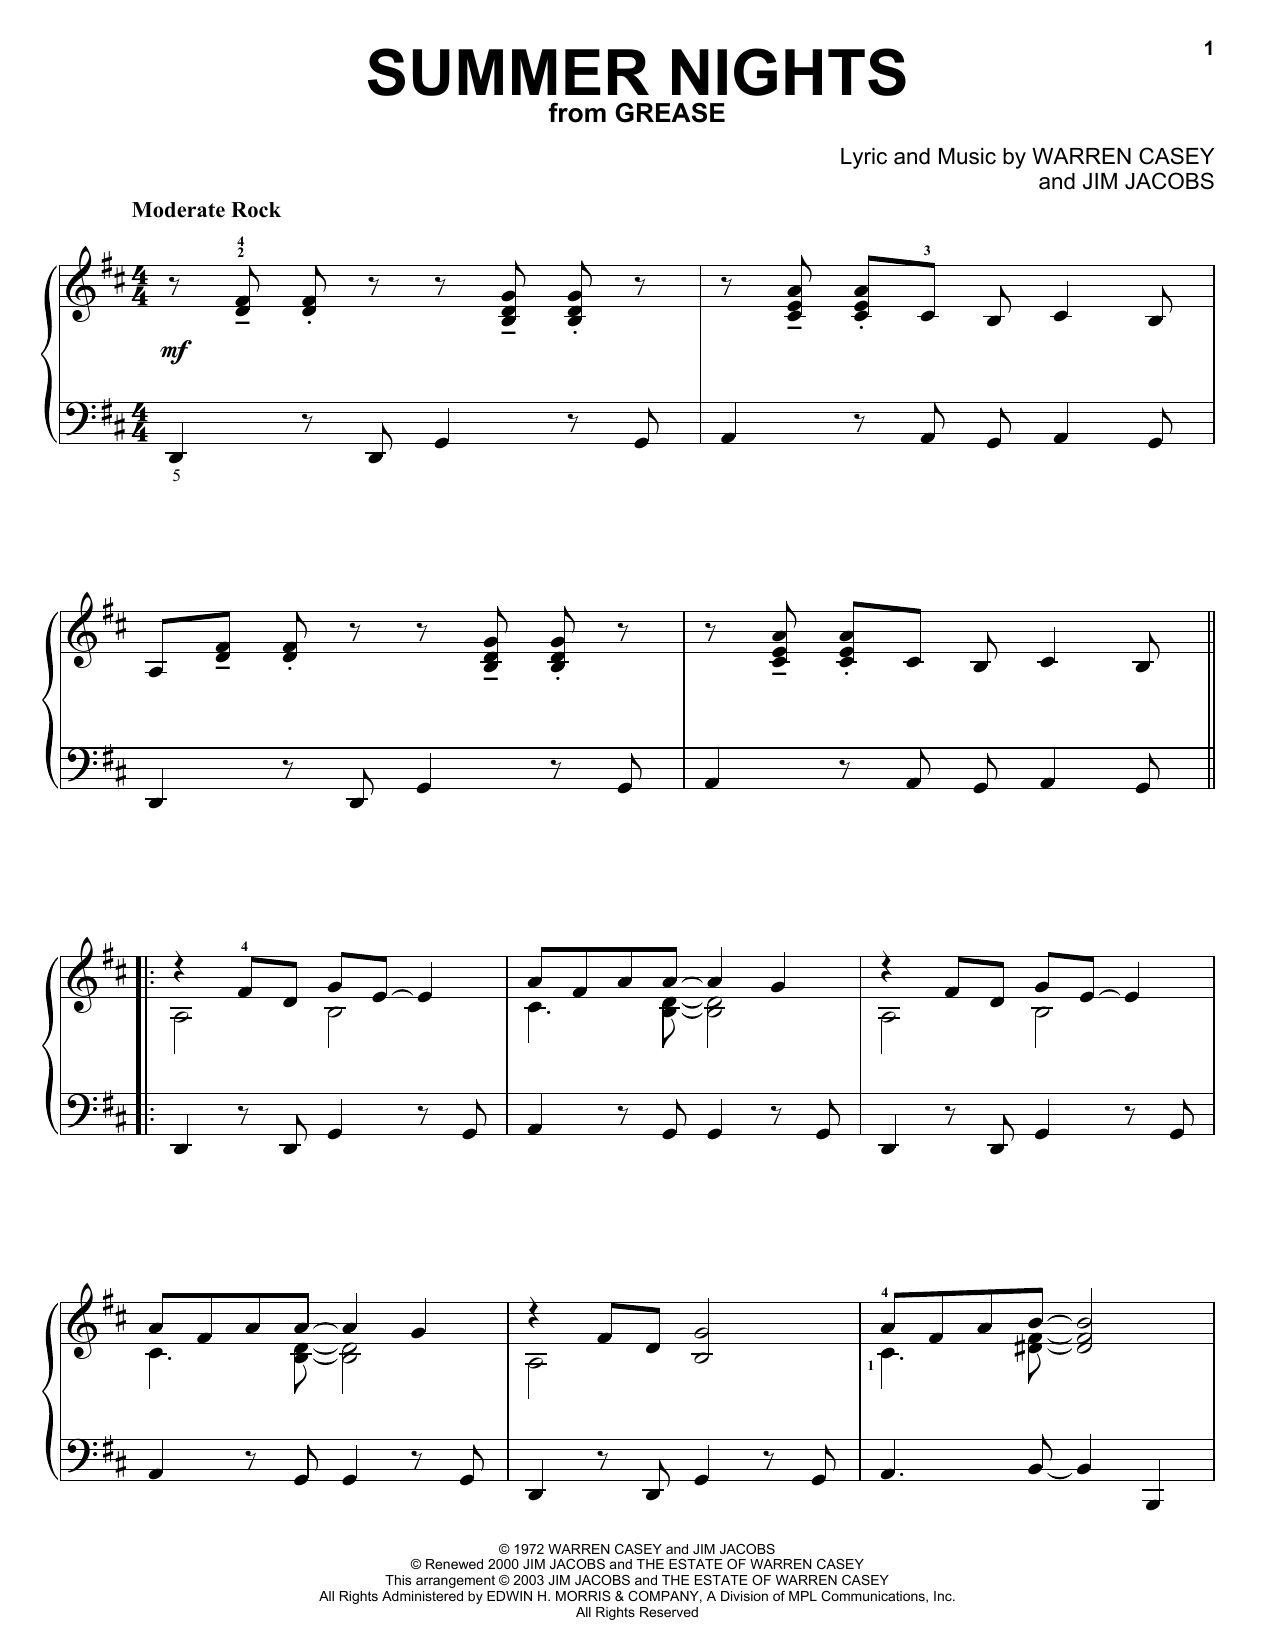 Olivia Newton-John Summer Nights Sheet Music Notes & Chords for Piano - Download or Print PDF